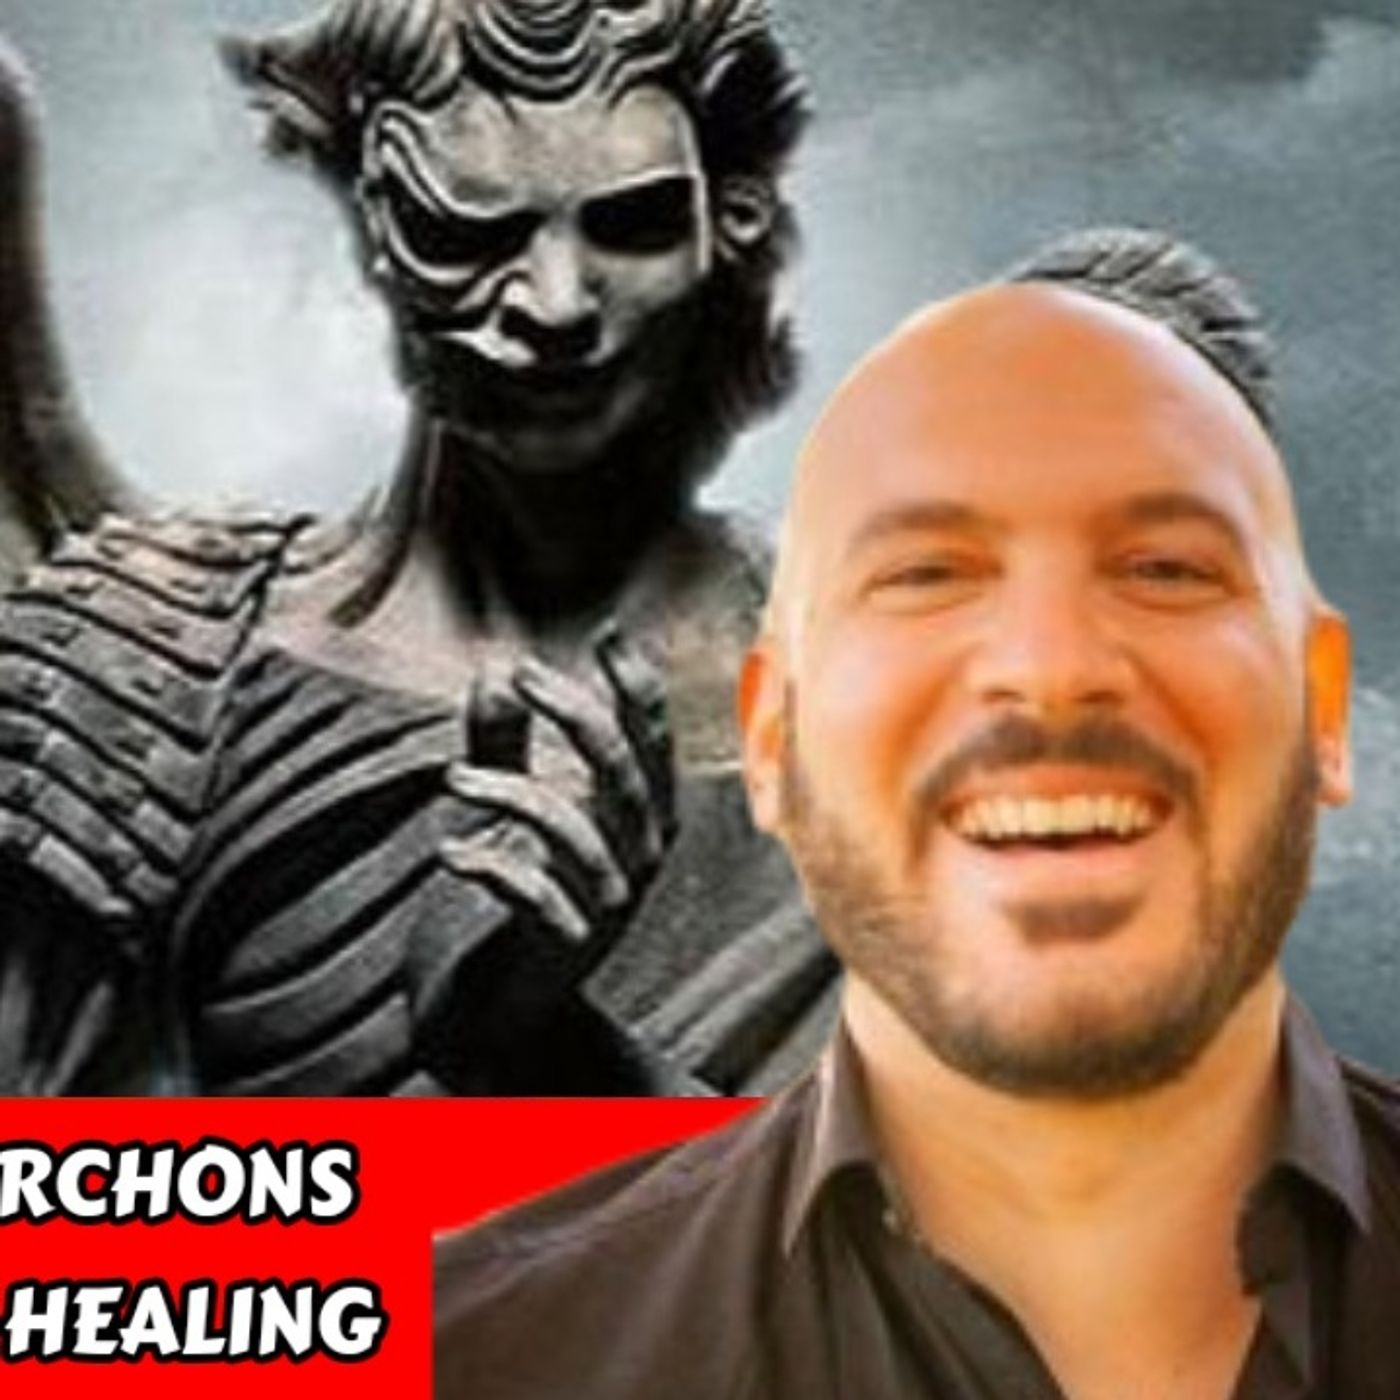 Perception Wars - Archons or Angels? - Infinity Healing | Tarek Bibi